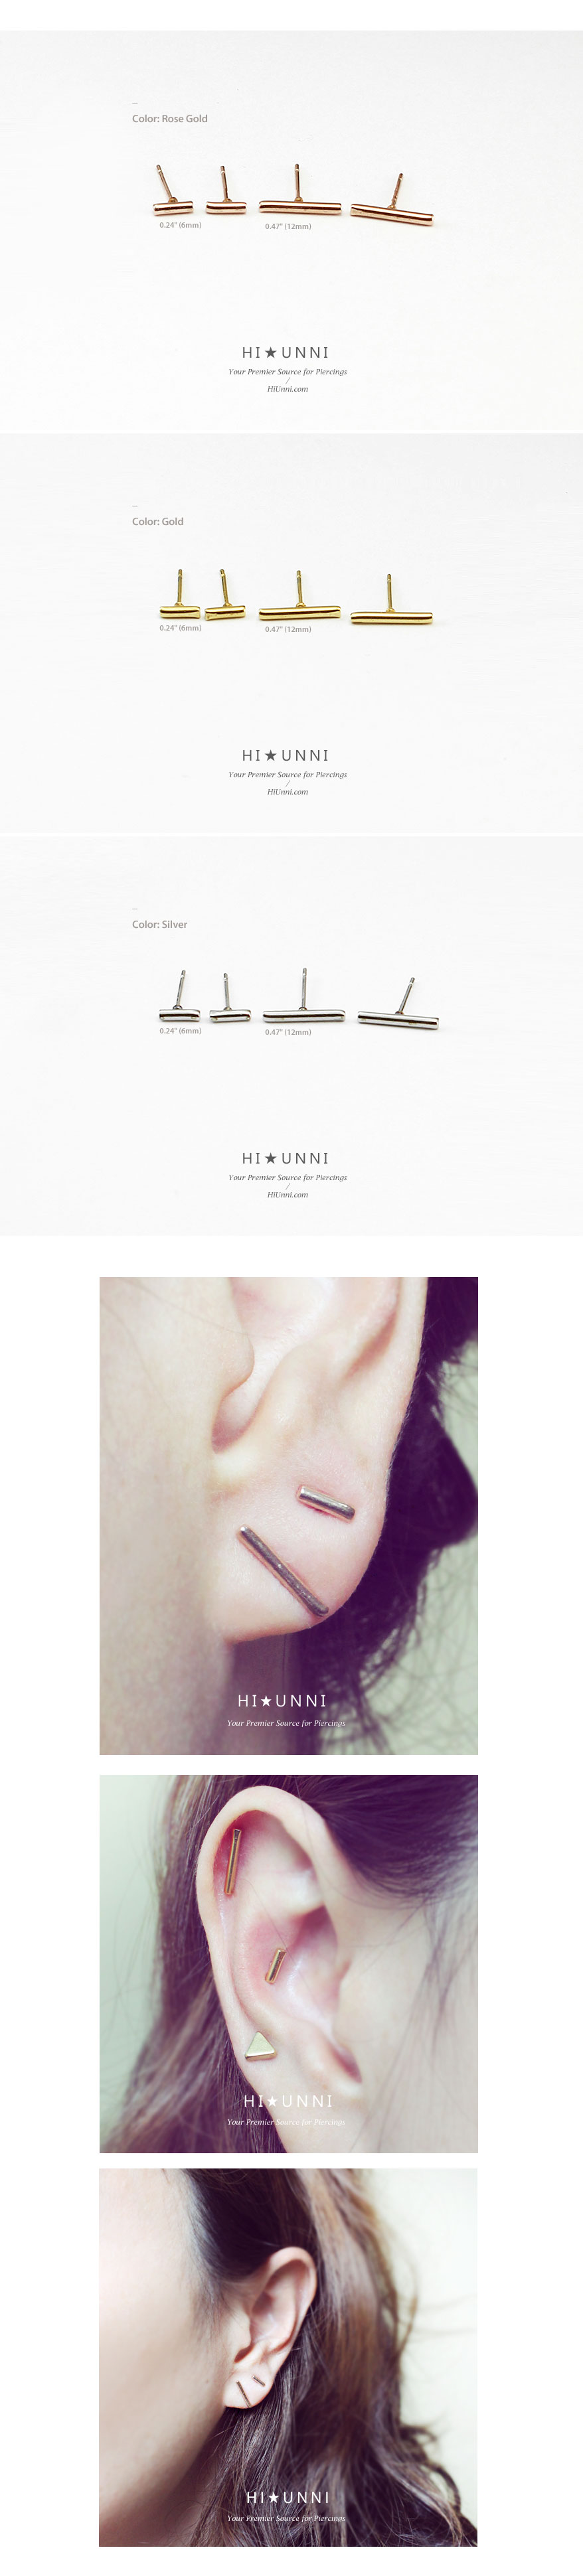 accessories_ear_stud_earrings_korean_asian_style_jewelry_18k_stick_bar_rose_gold_trendy_4